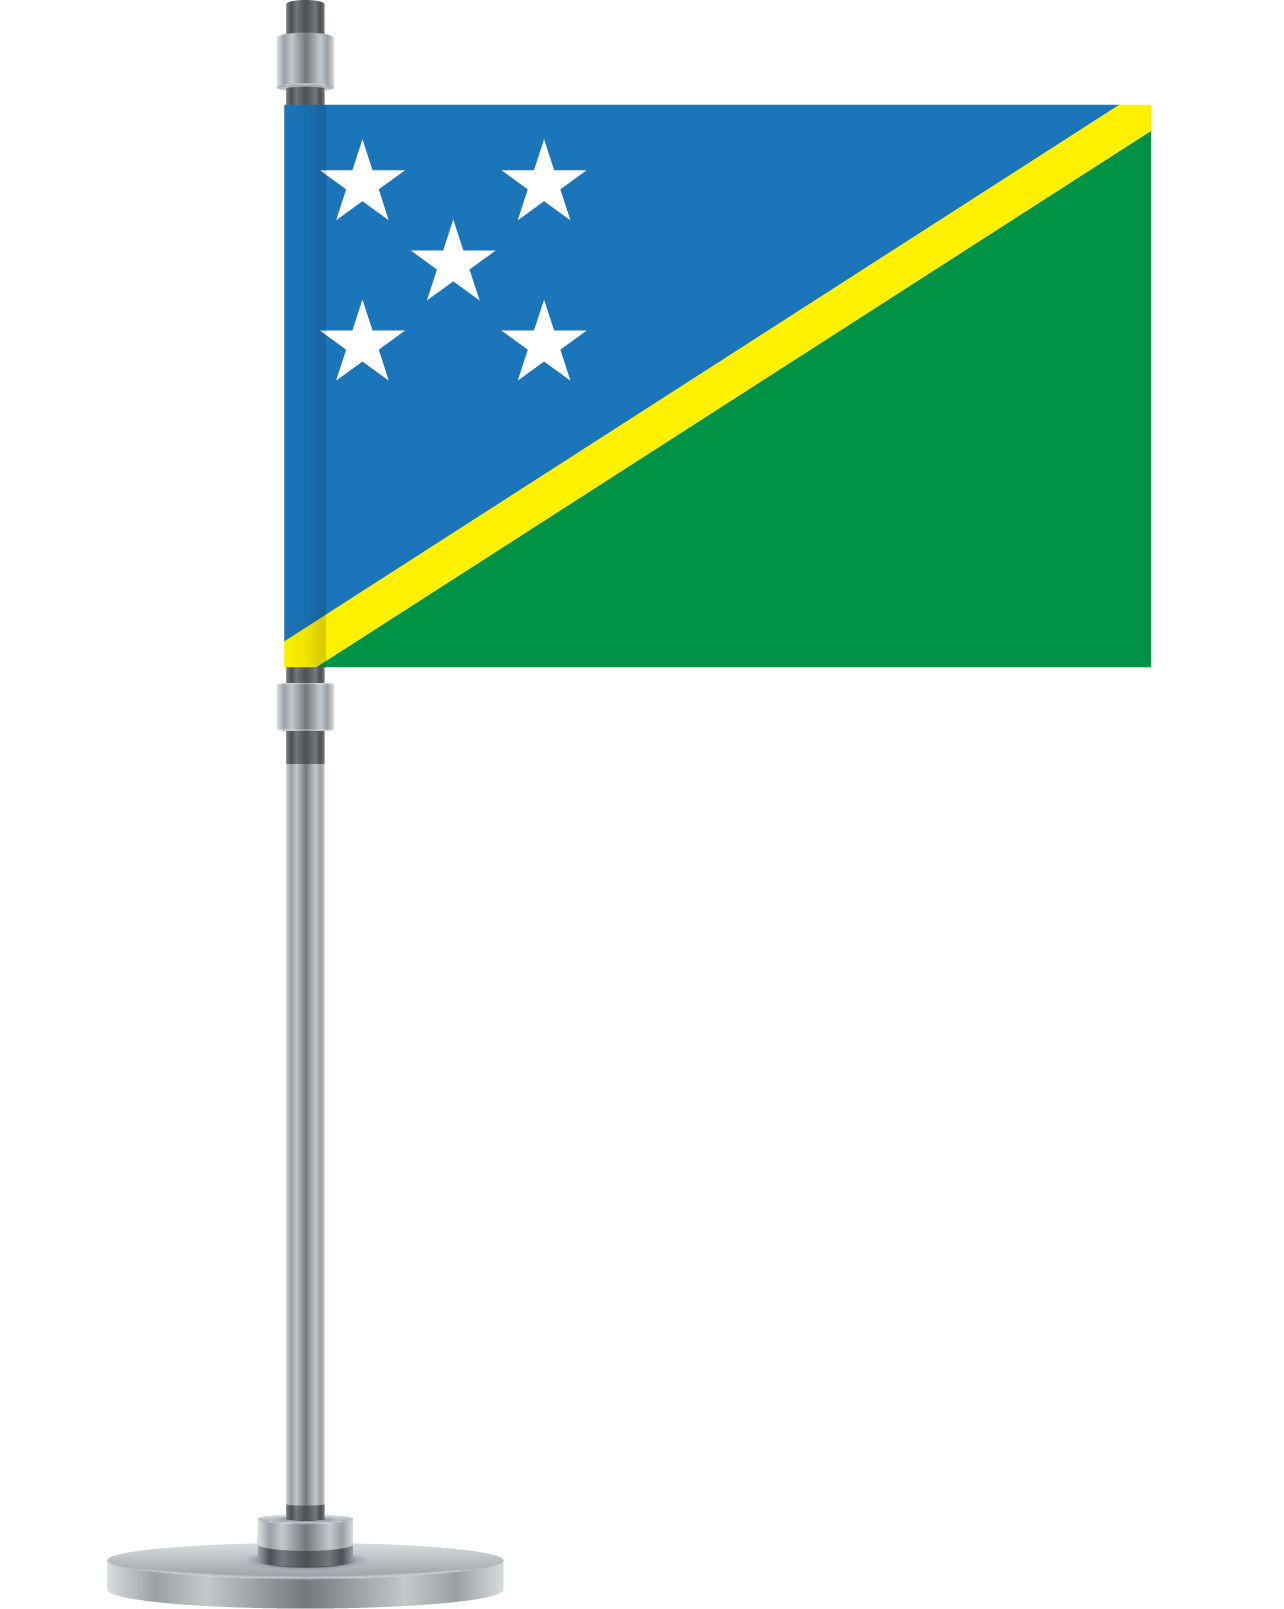 Solomon Island Flag